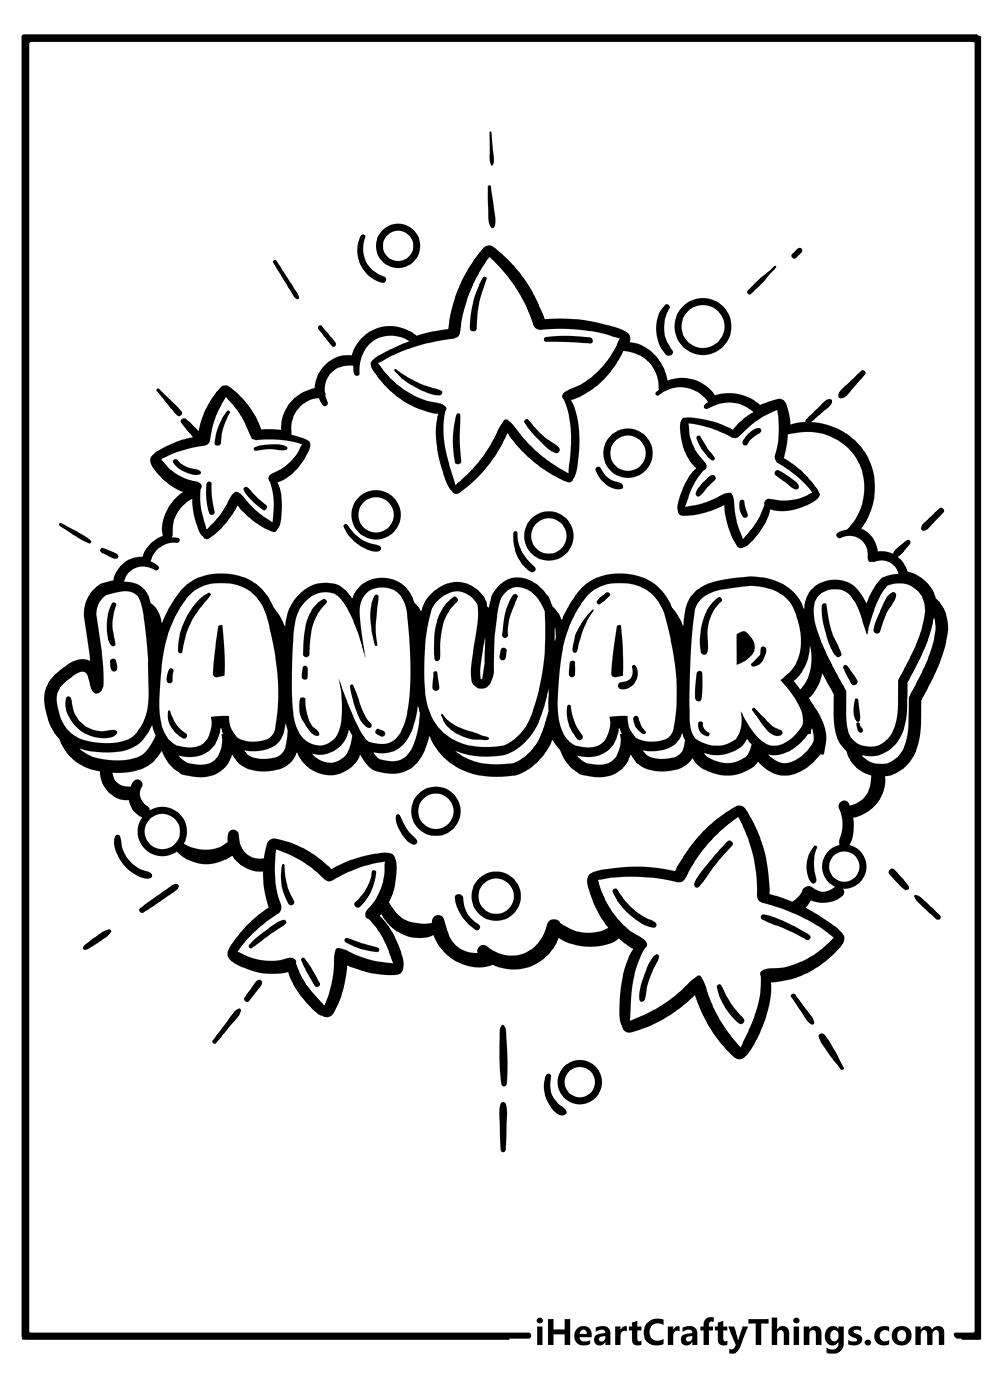 January Coloring Original Sheet for children free download